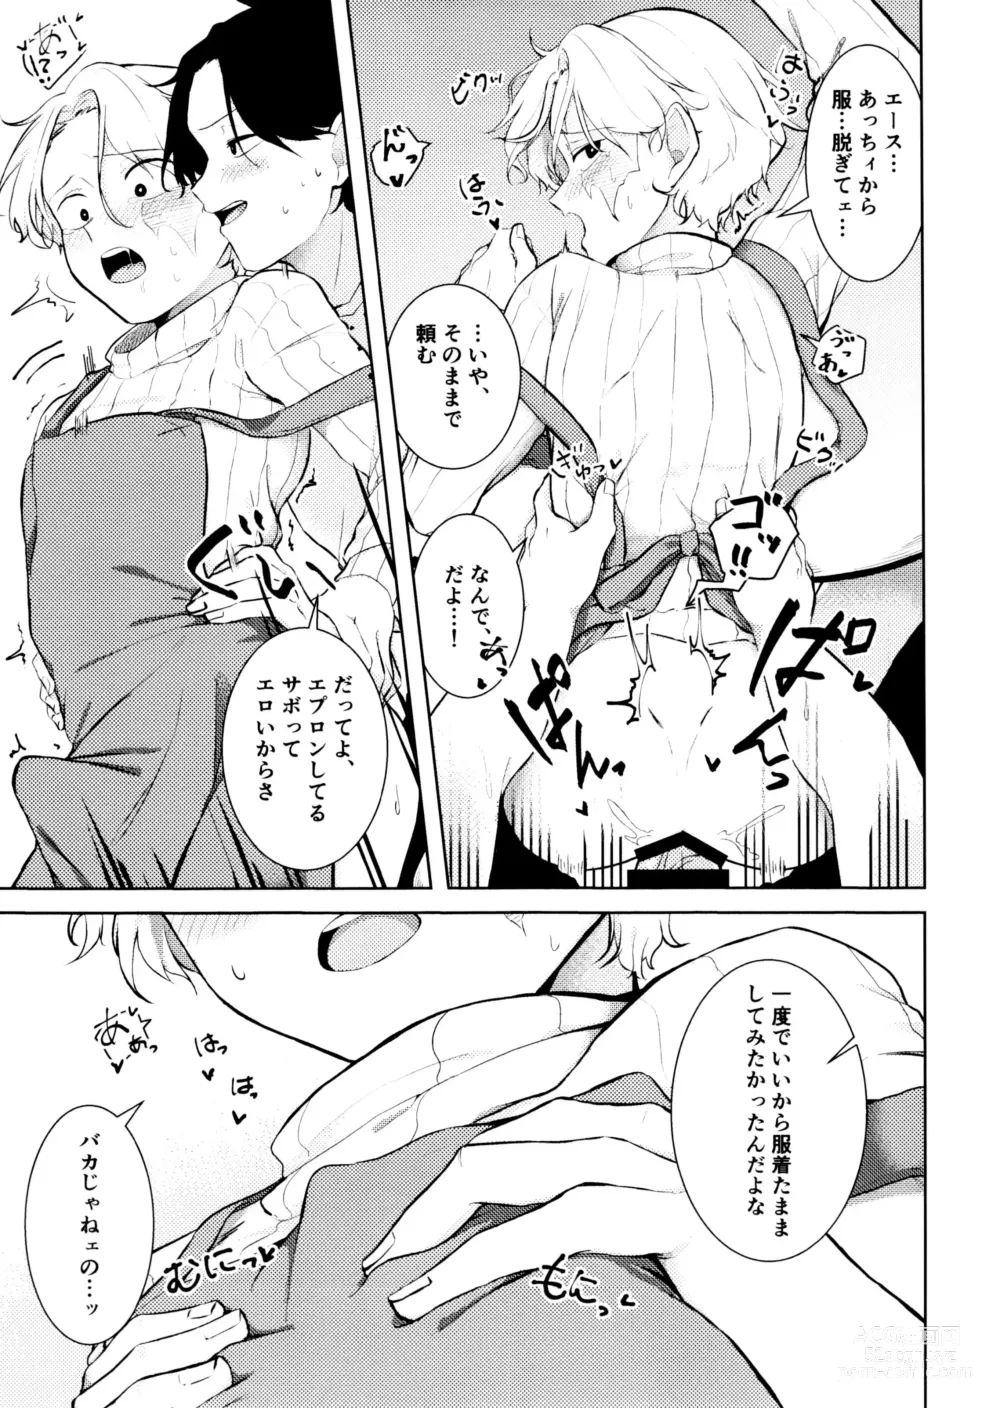 Page 17 of doujinshi Fuyu to Knit to Apron to